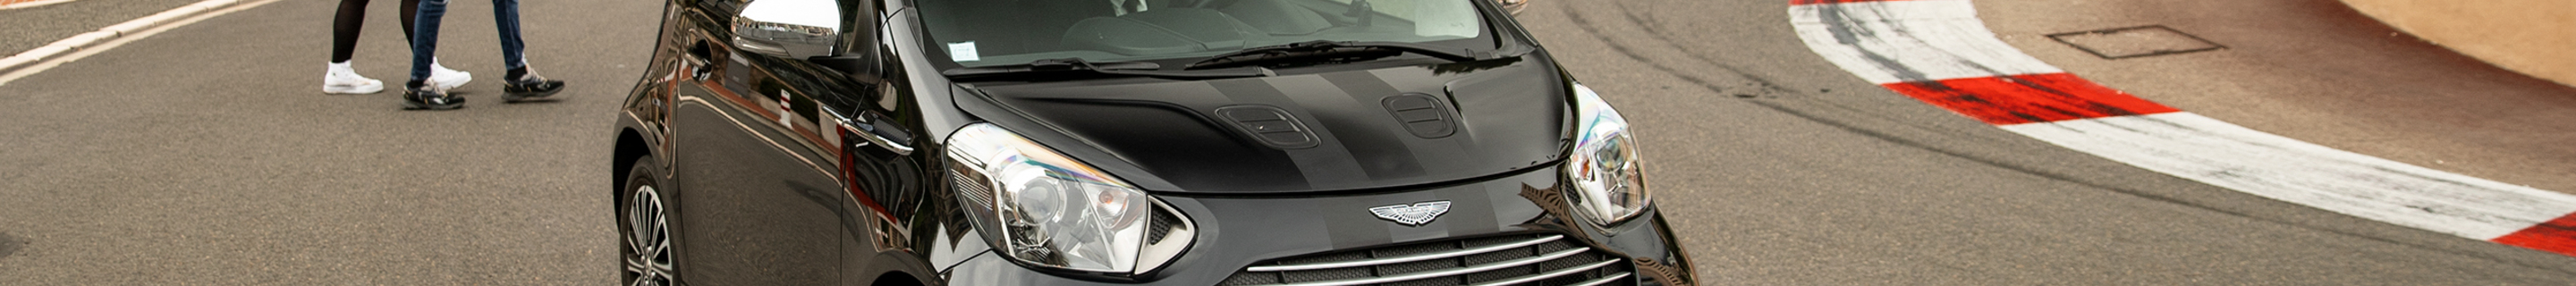 Aston Martin Cygnet Launch Edition Black